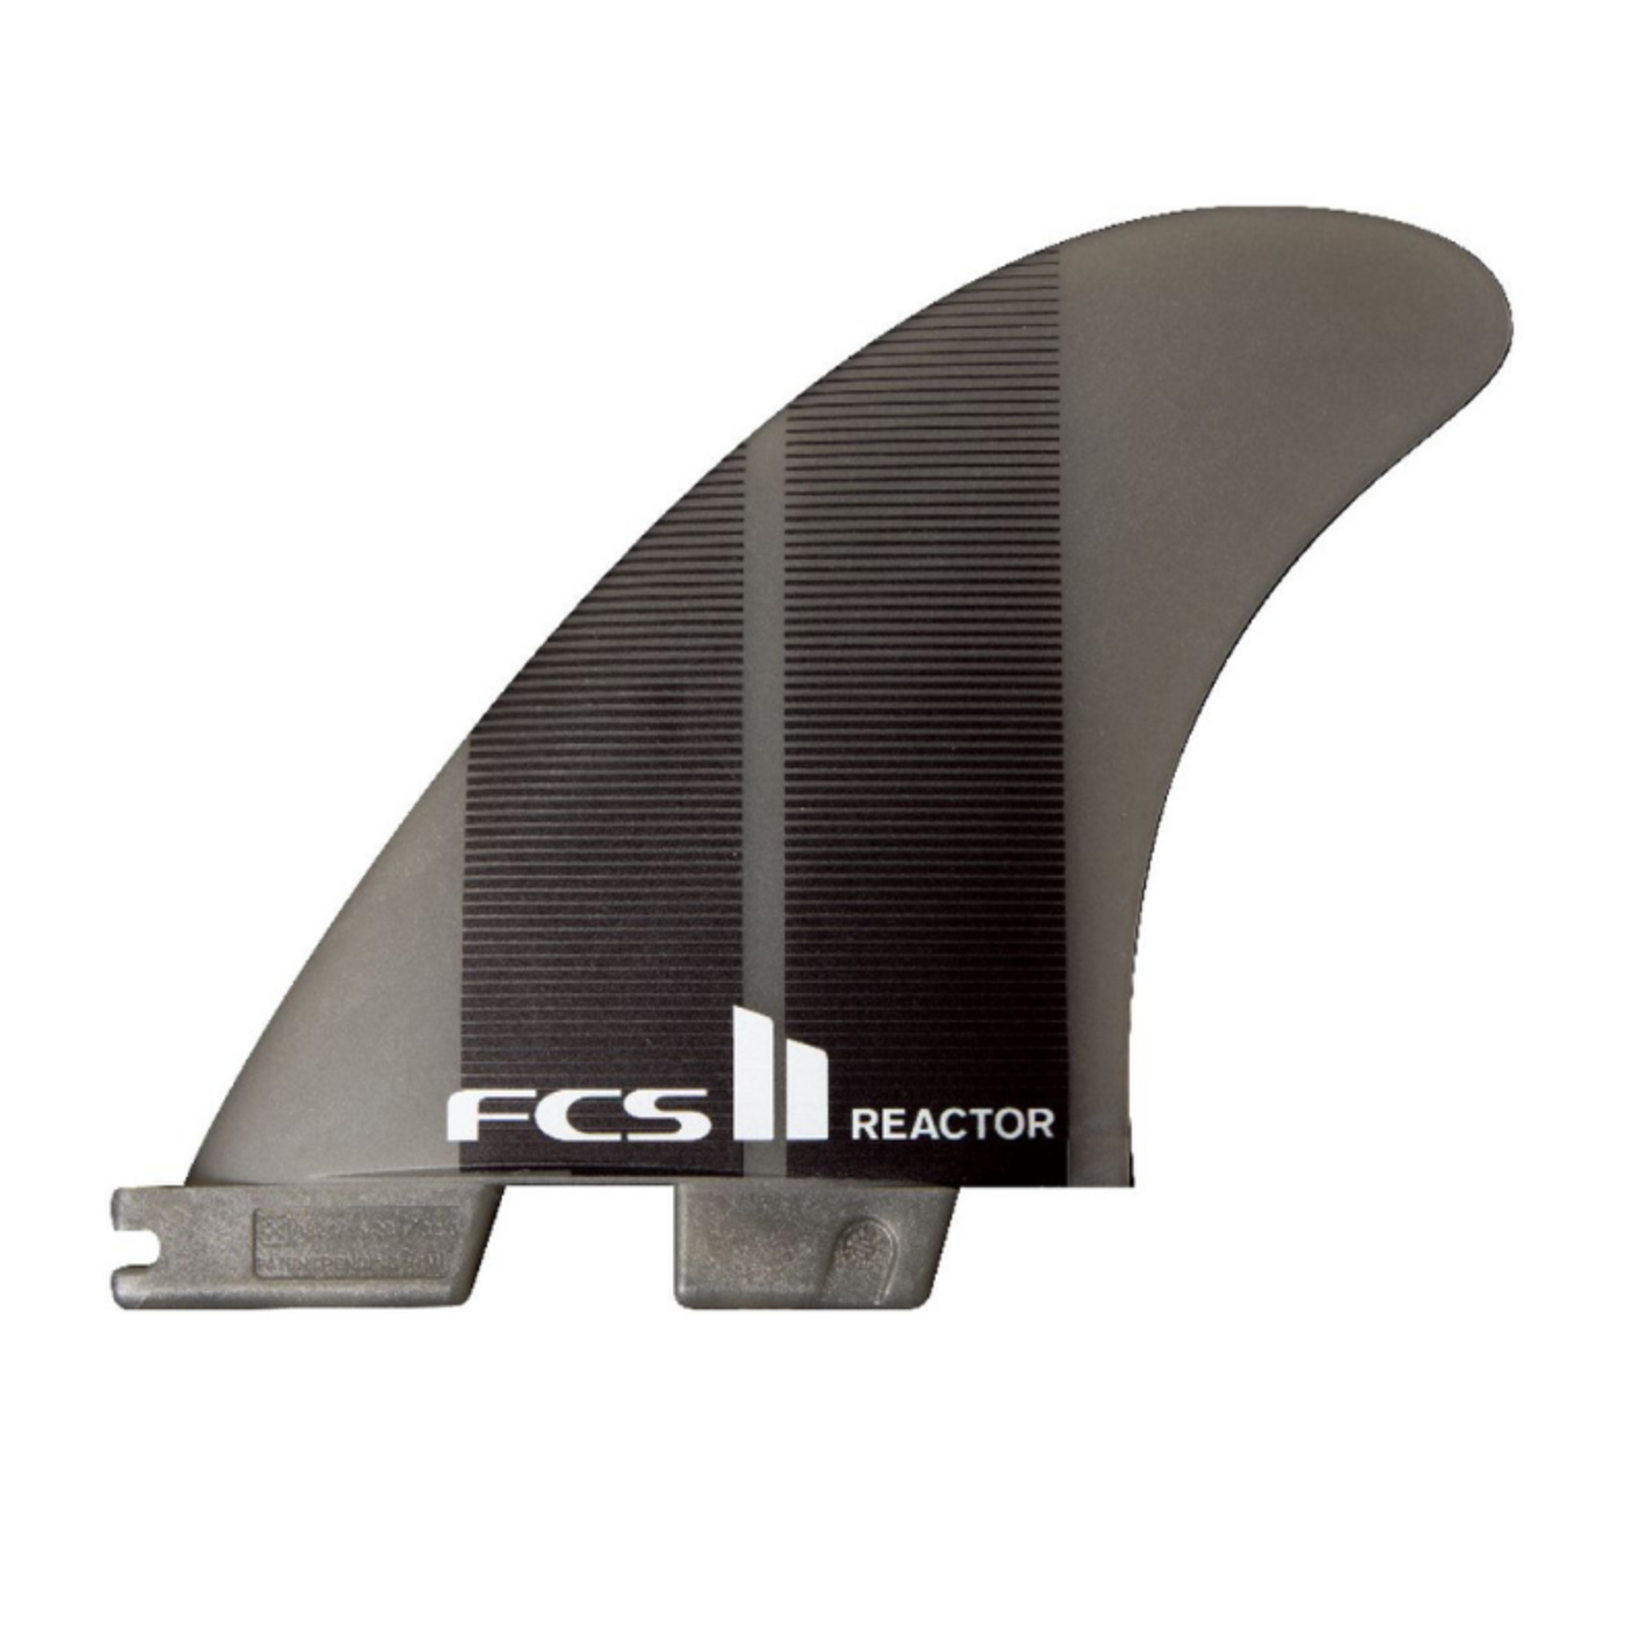 FCS FCS II Reactor Neo Glass Charcoal Tri Fin Set.